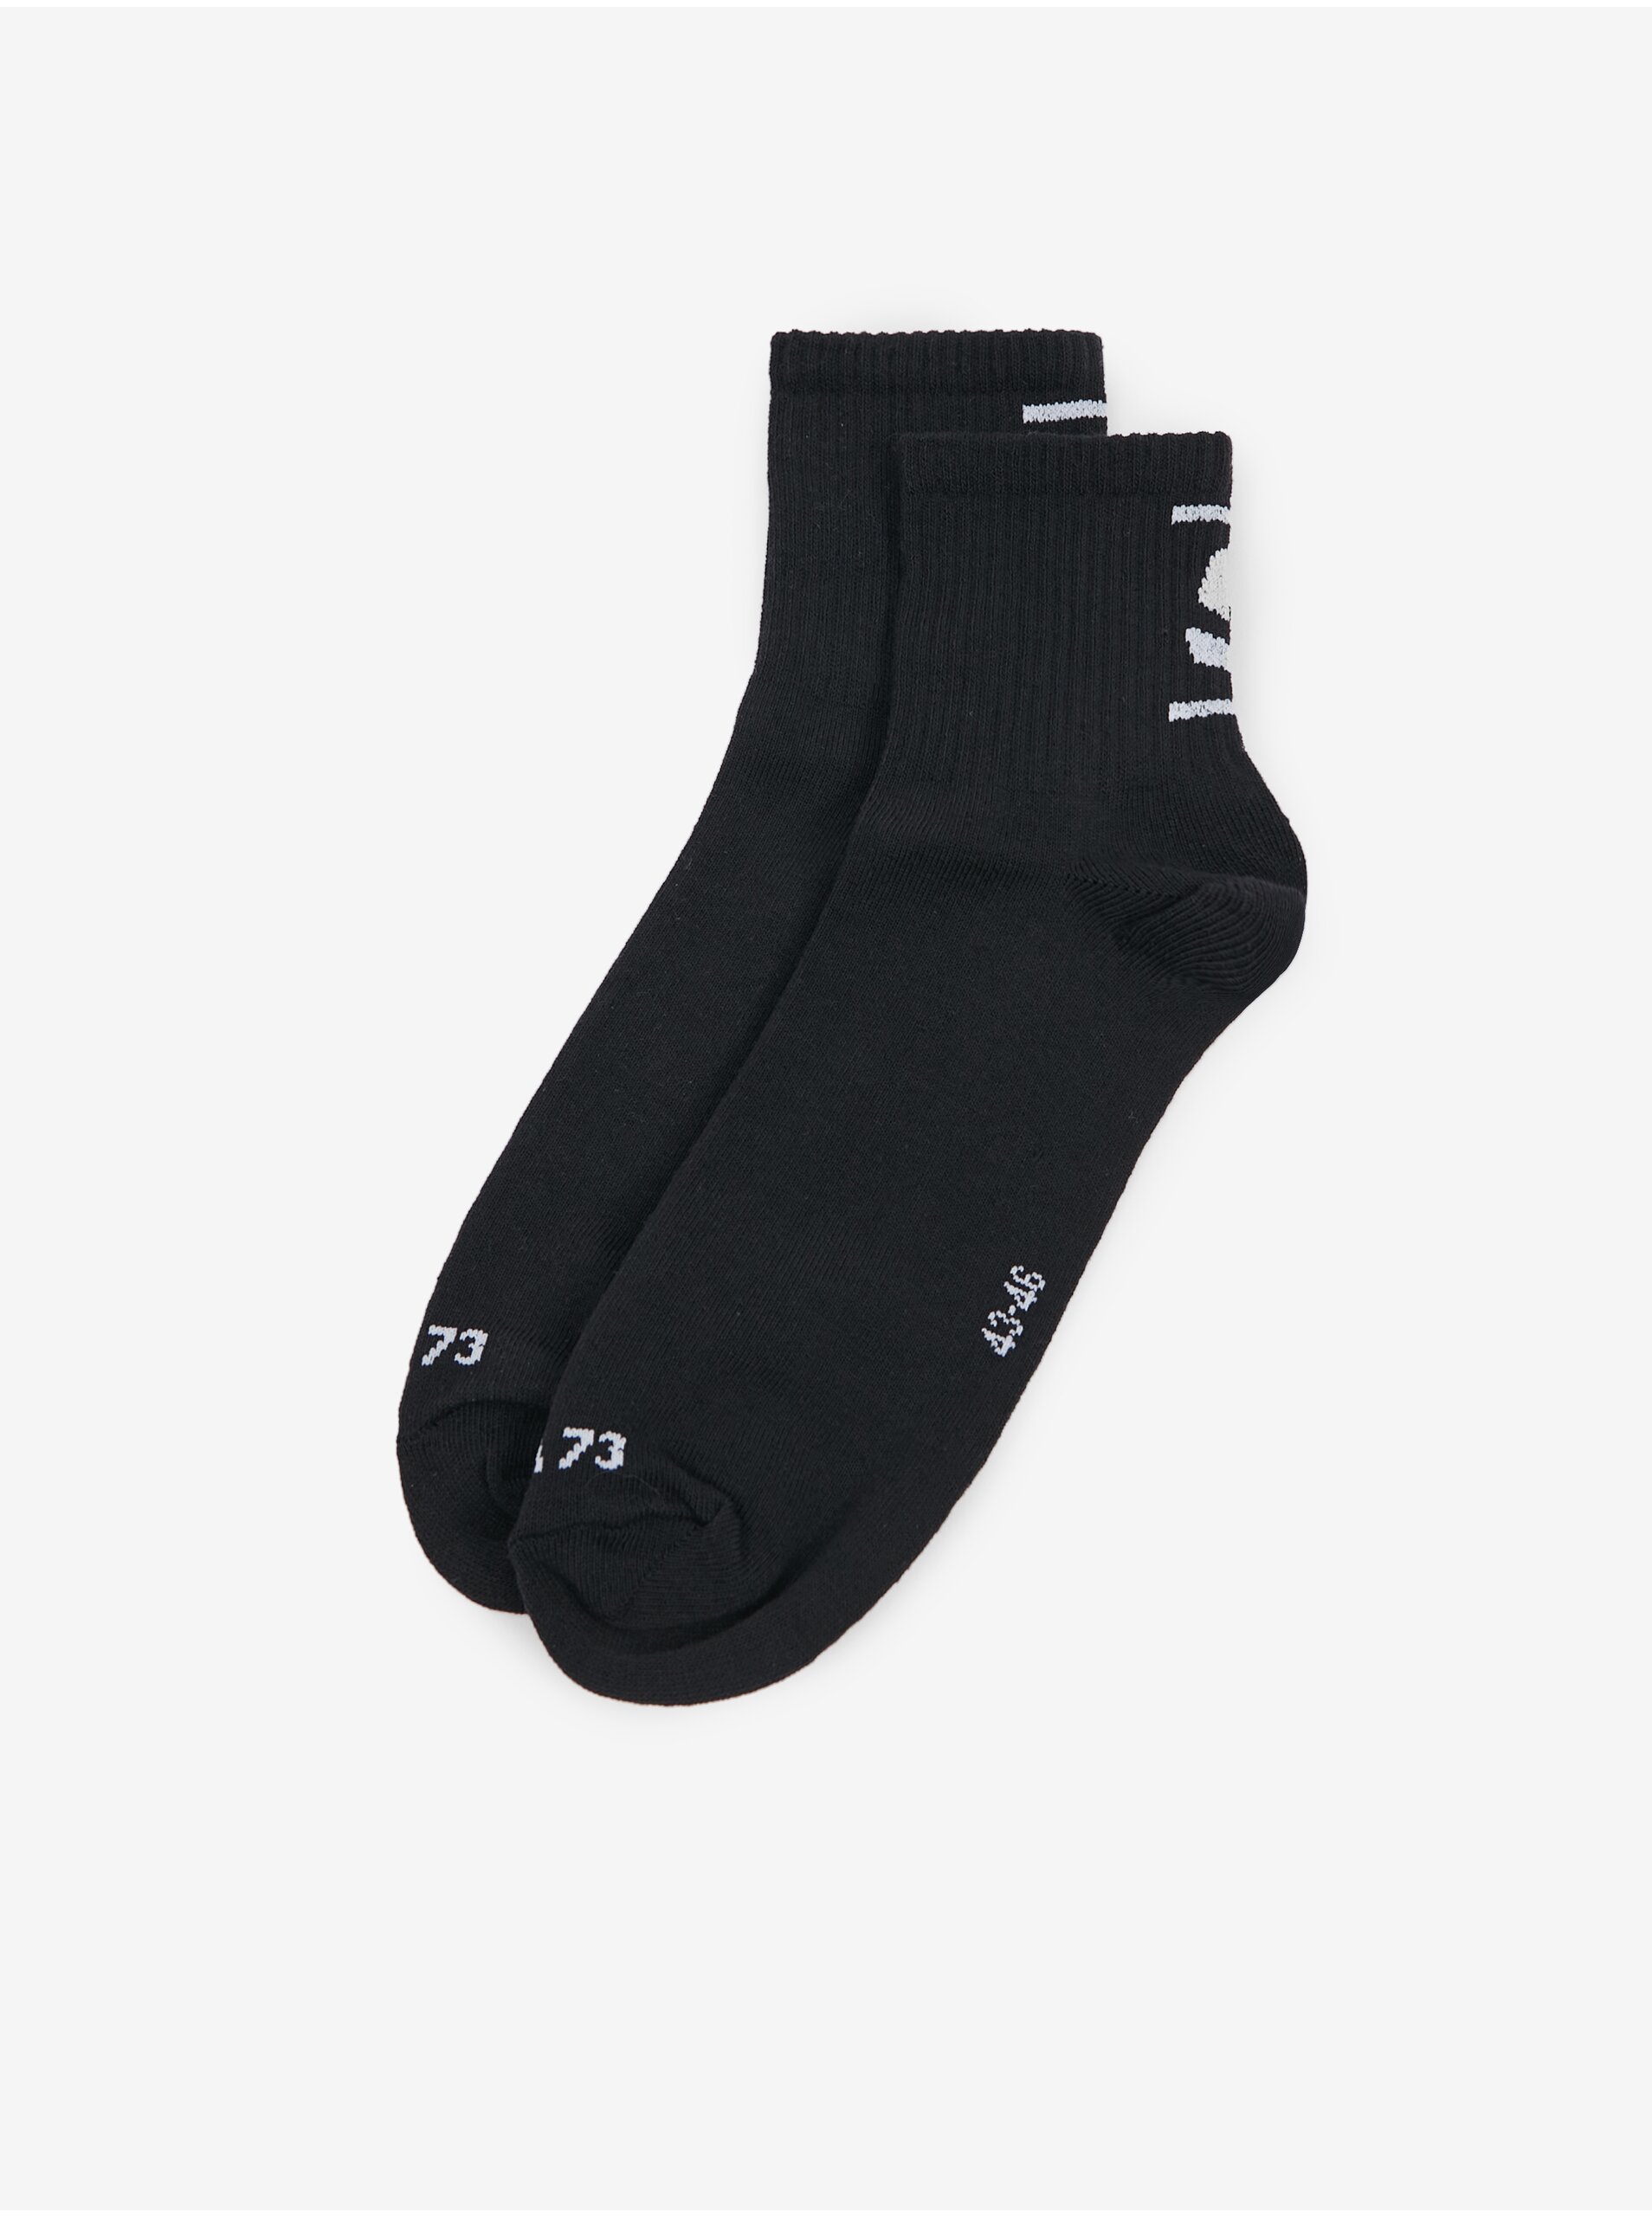 Lacno Čierne ponožky SAM 73 Twizel